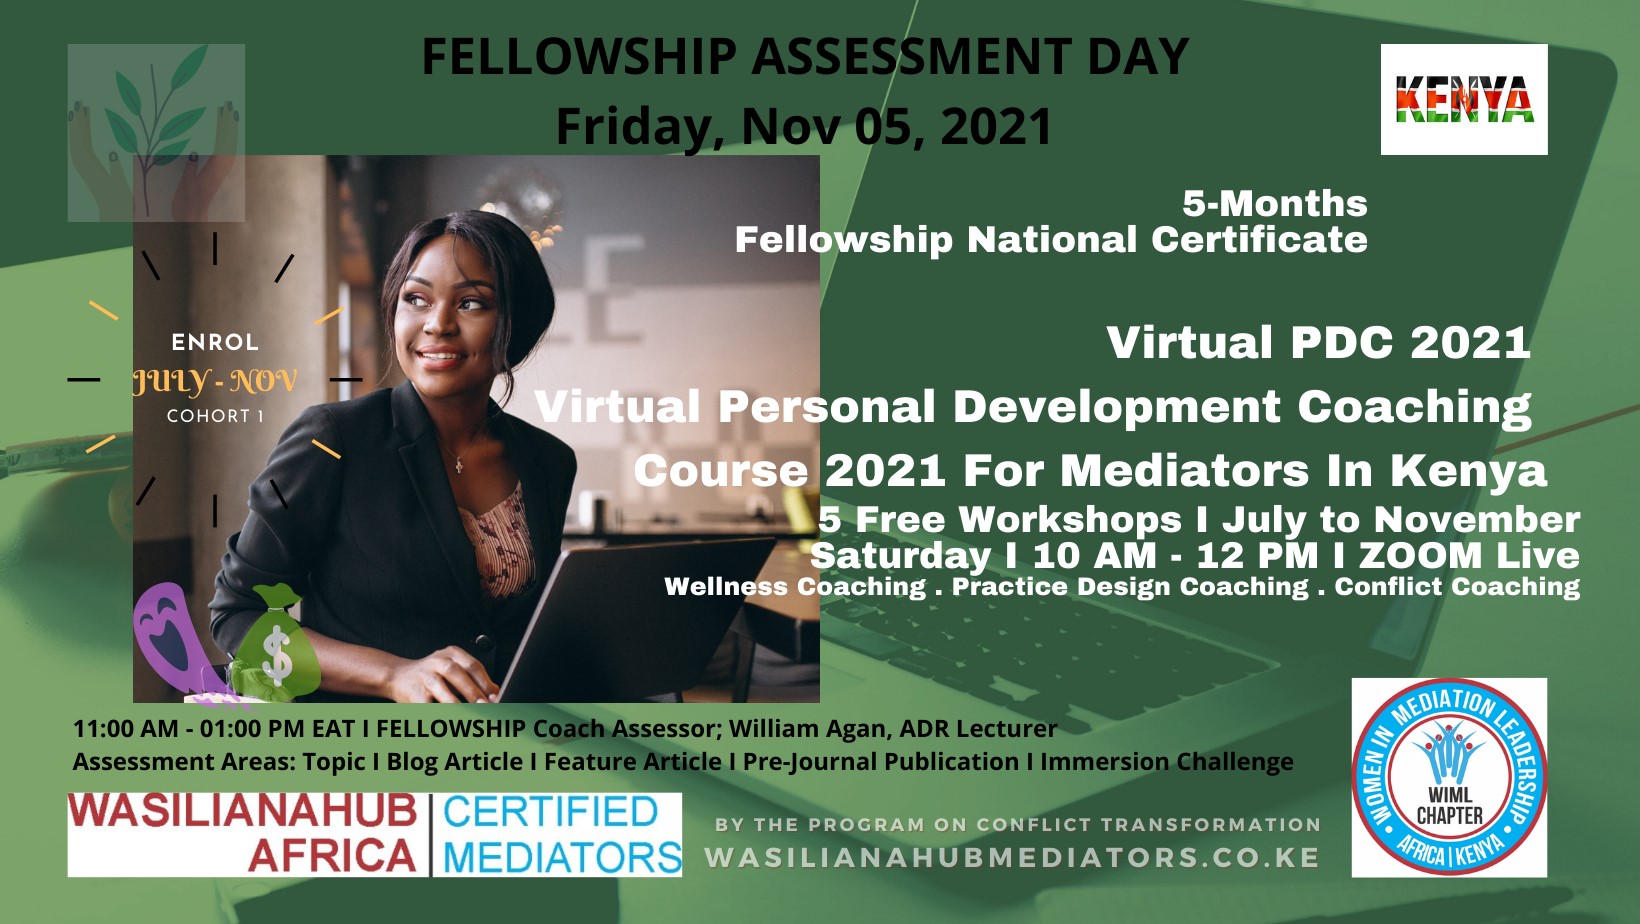 Fellowship-Assessment-Day-2021-With-Fellowship-Coach-Assessor-William-Agan-ADR-Lecturer.jpg